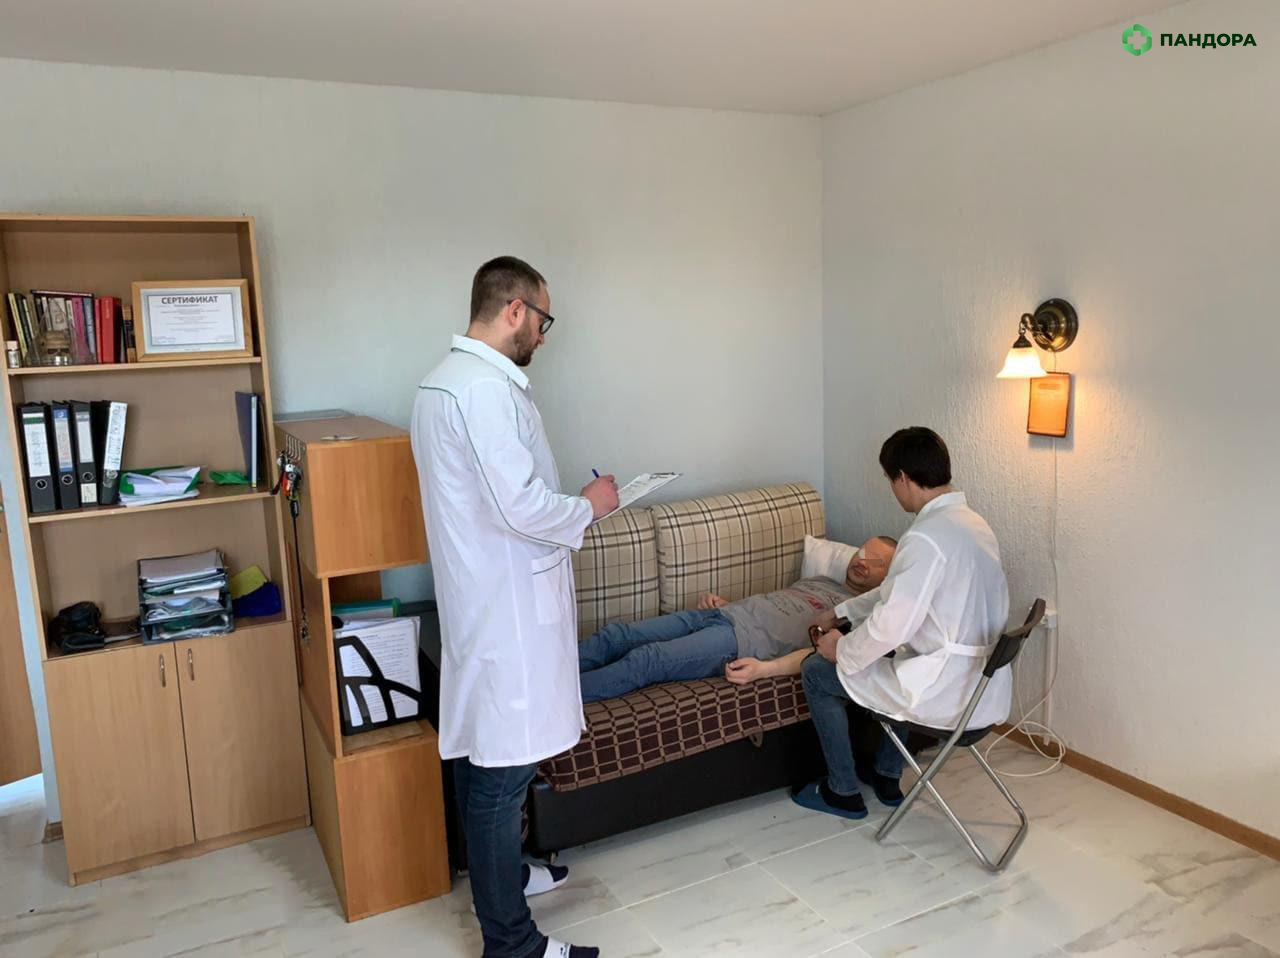 Два врача мужчины лечат пациента